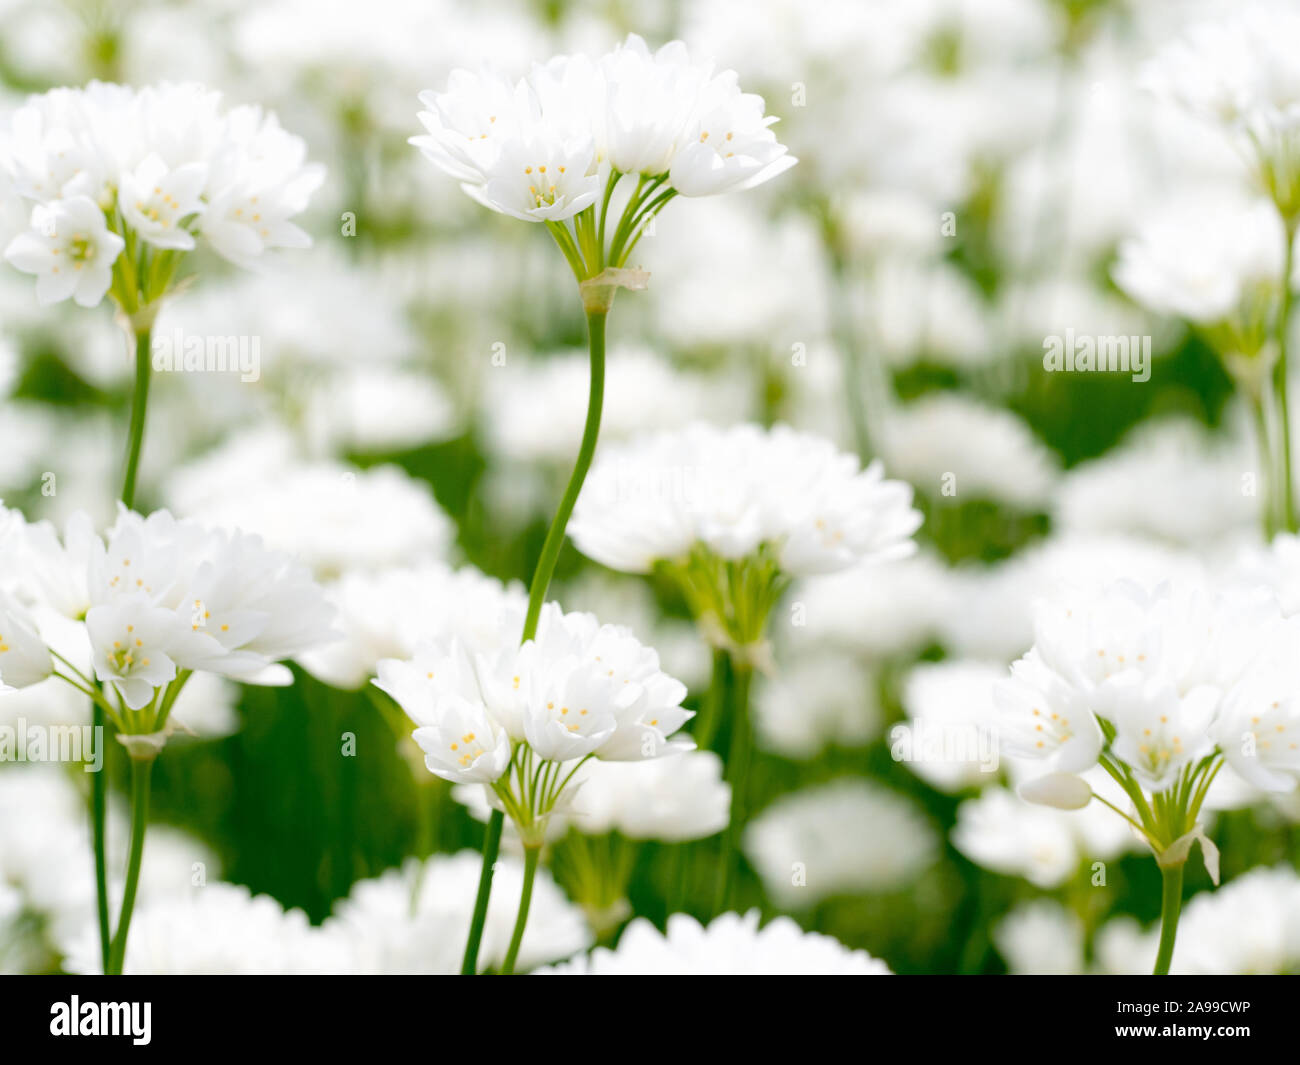 White flowers of Allium zebdanense. Stock Photo